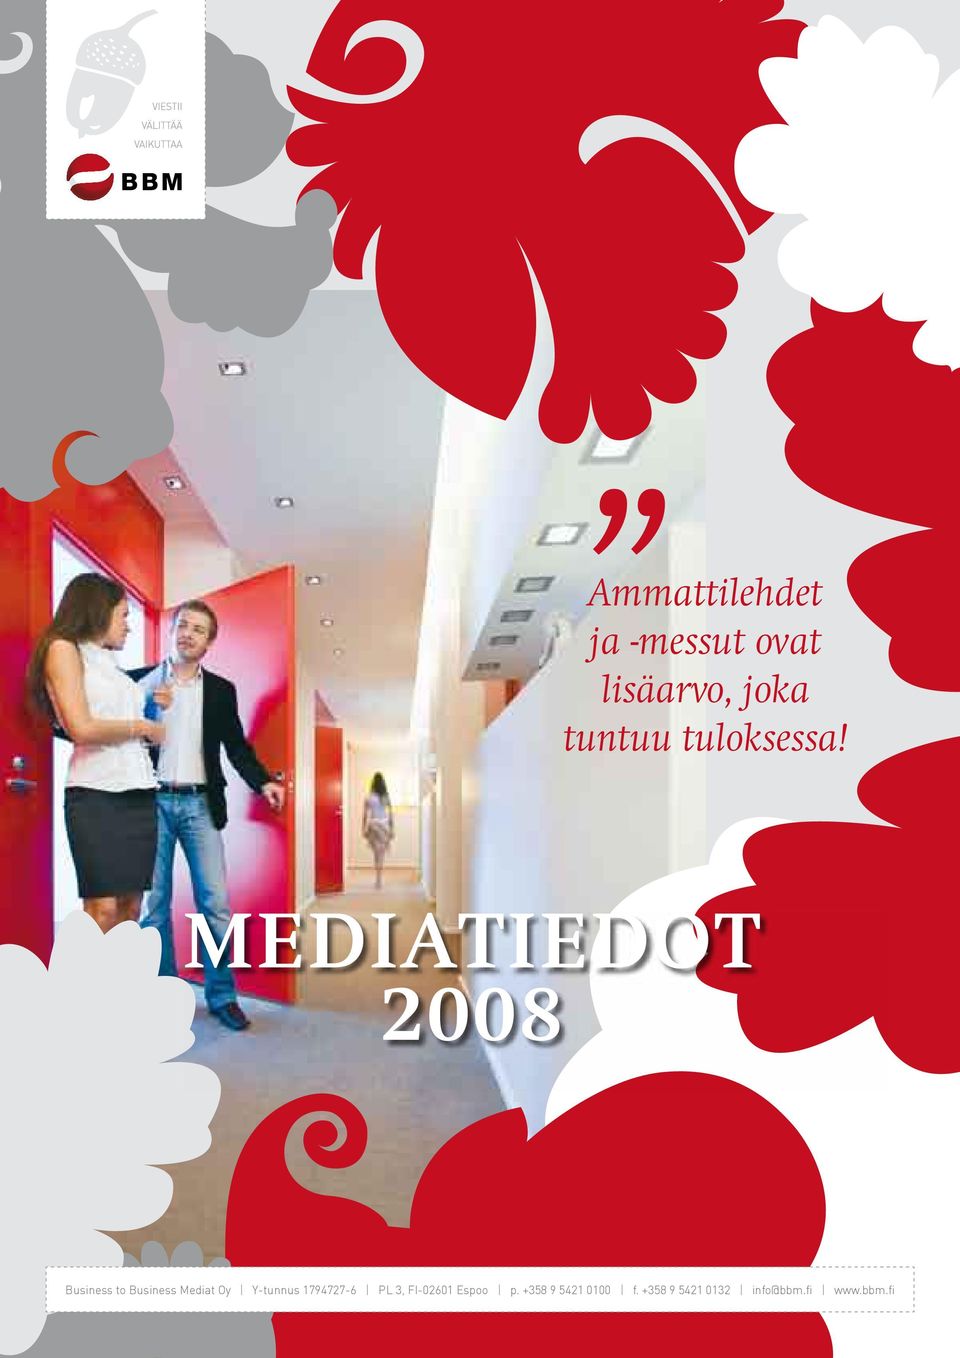 Mediatiedot 2008 Business to Business Mediat Oy